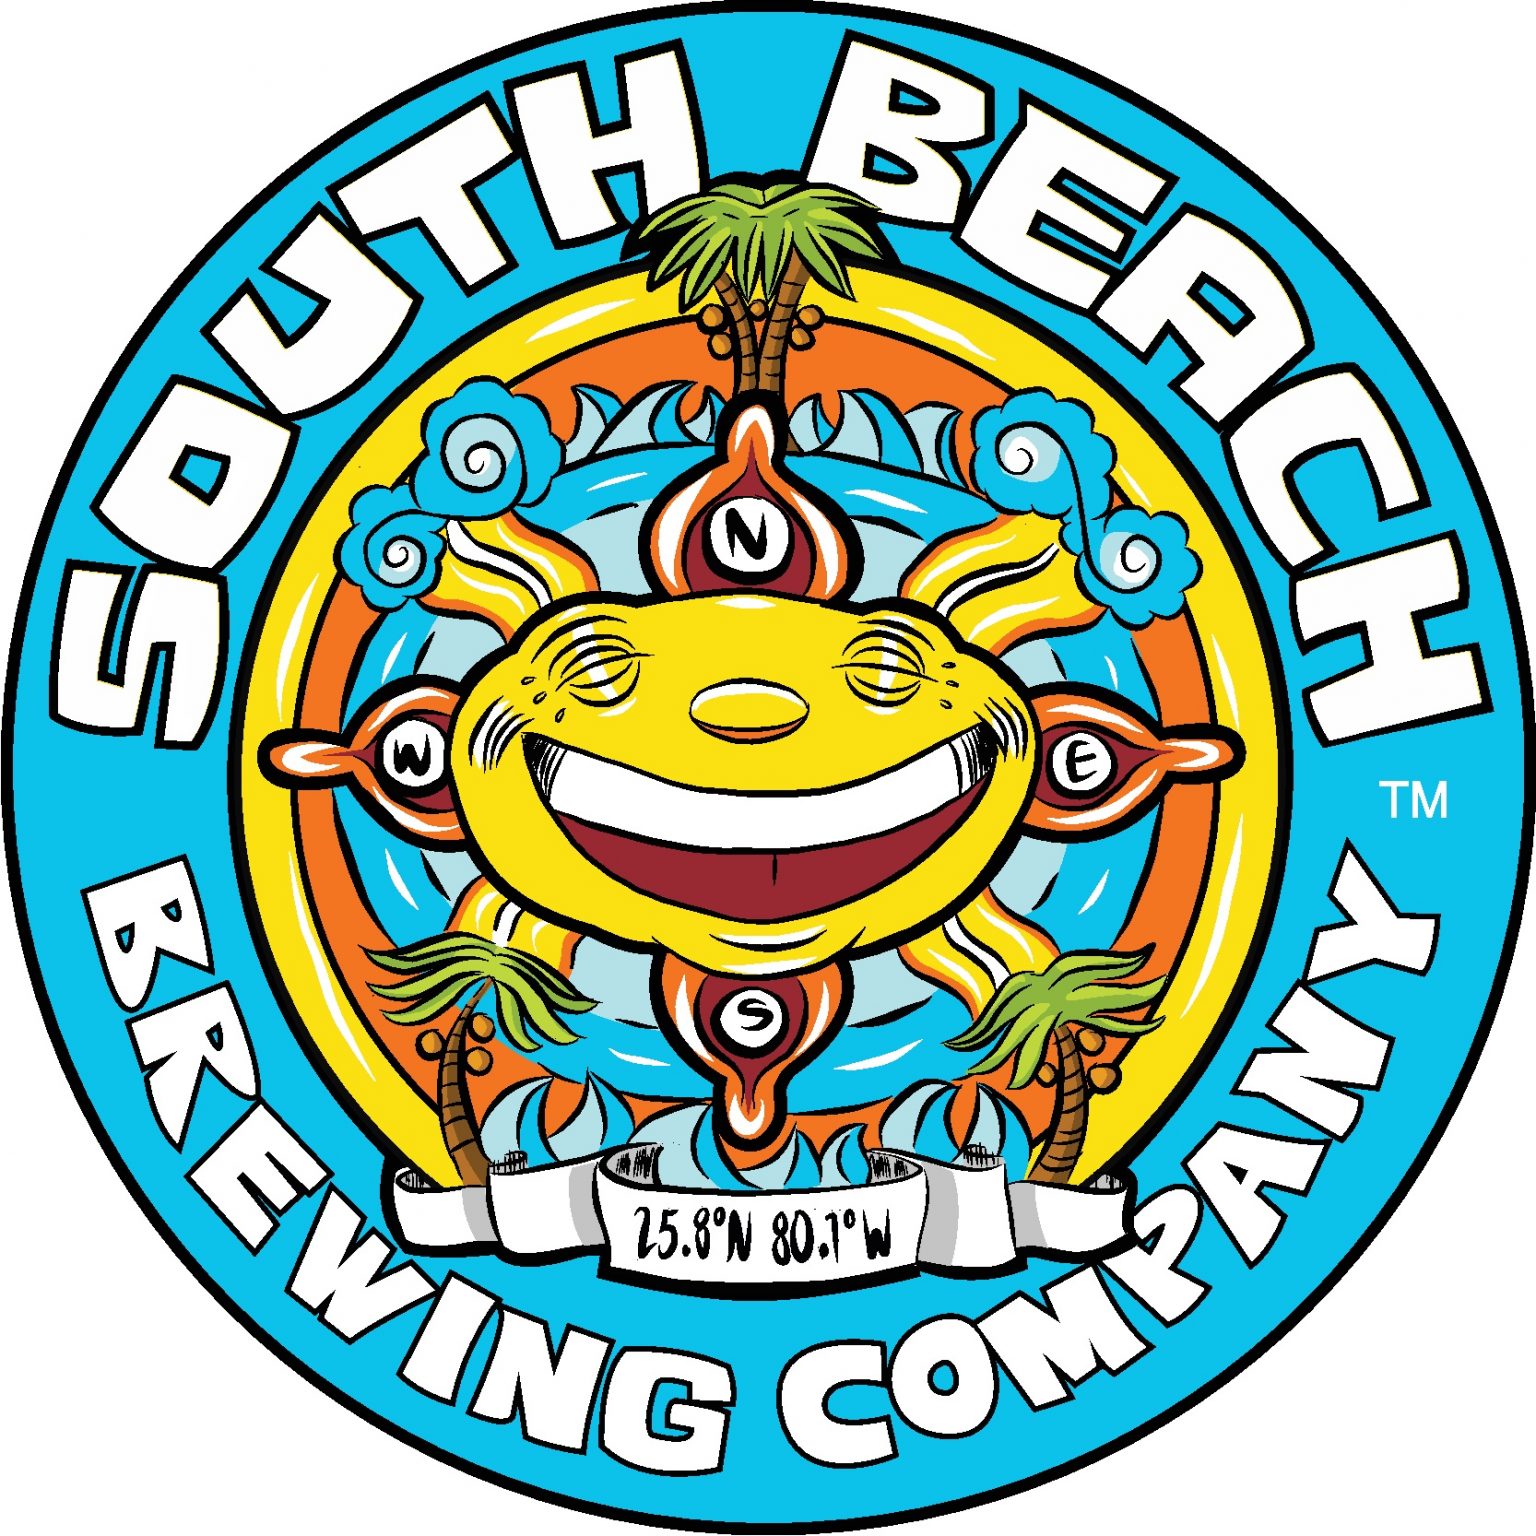 South Beach Brewing Co.